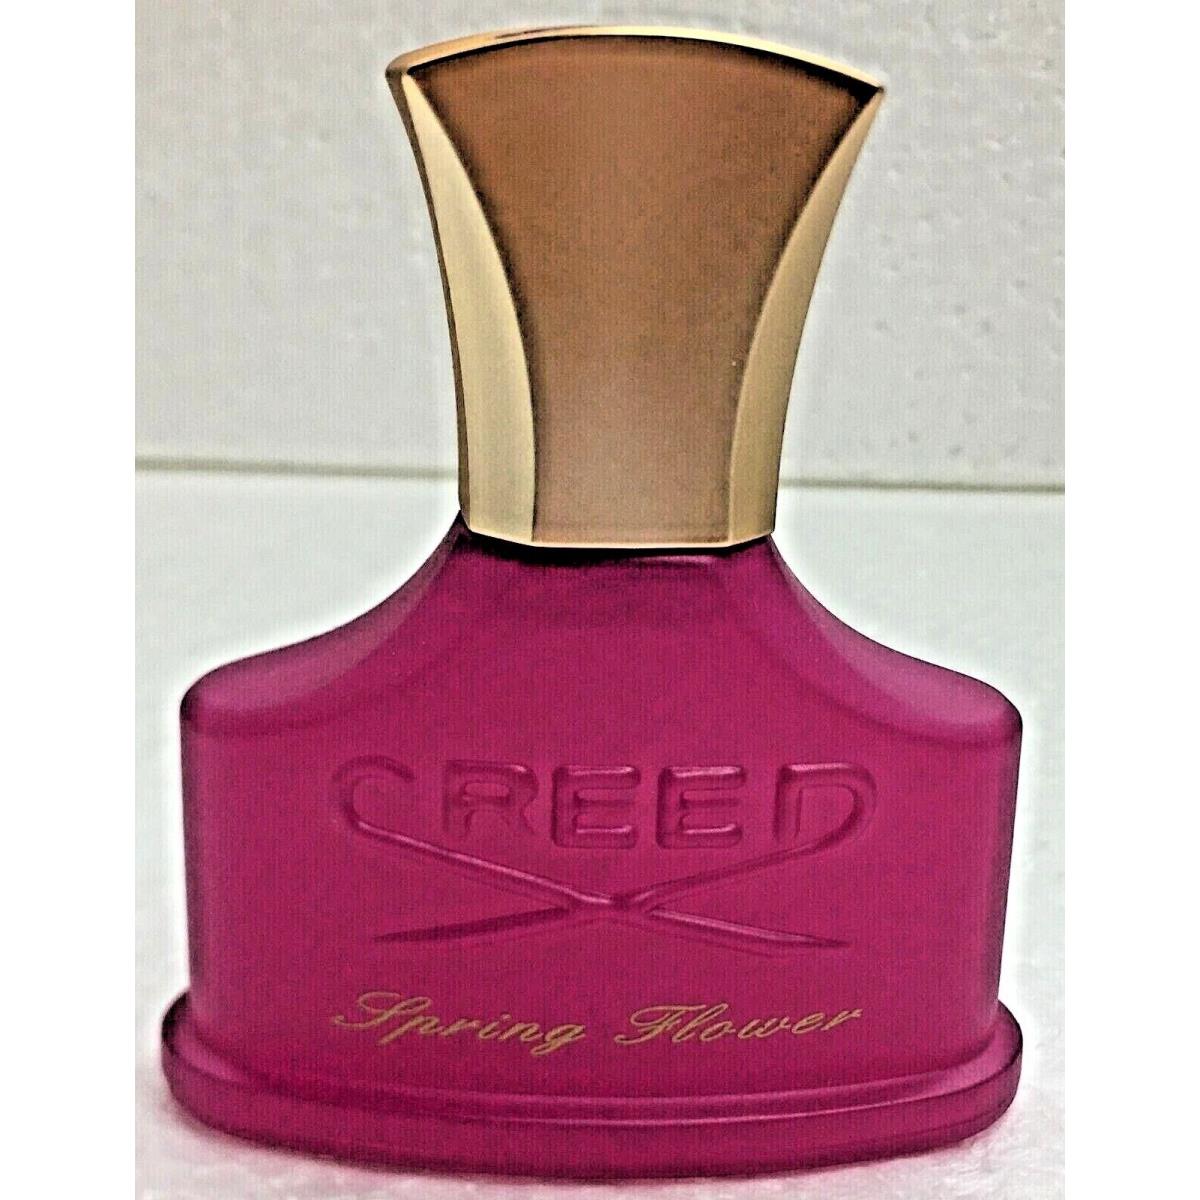 Creed perfume,cologne,fragrance,parfum 